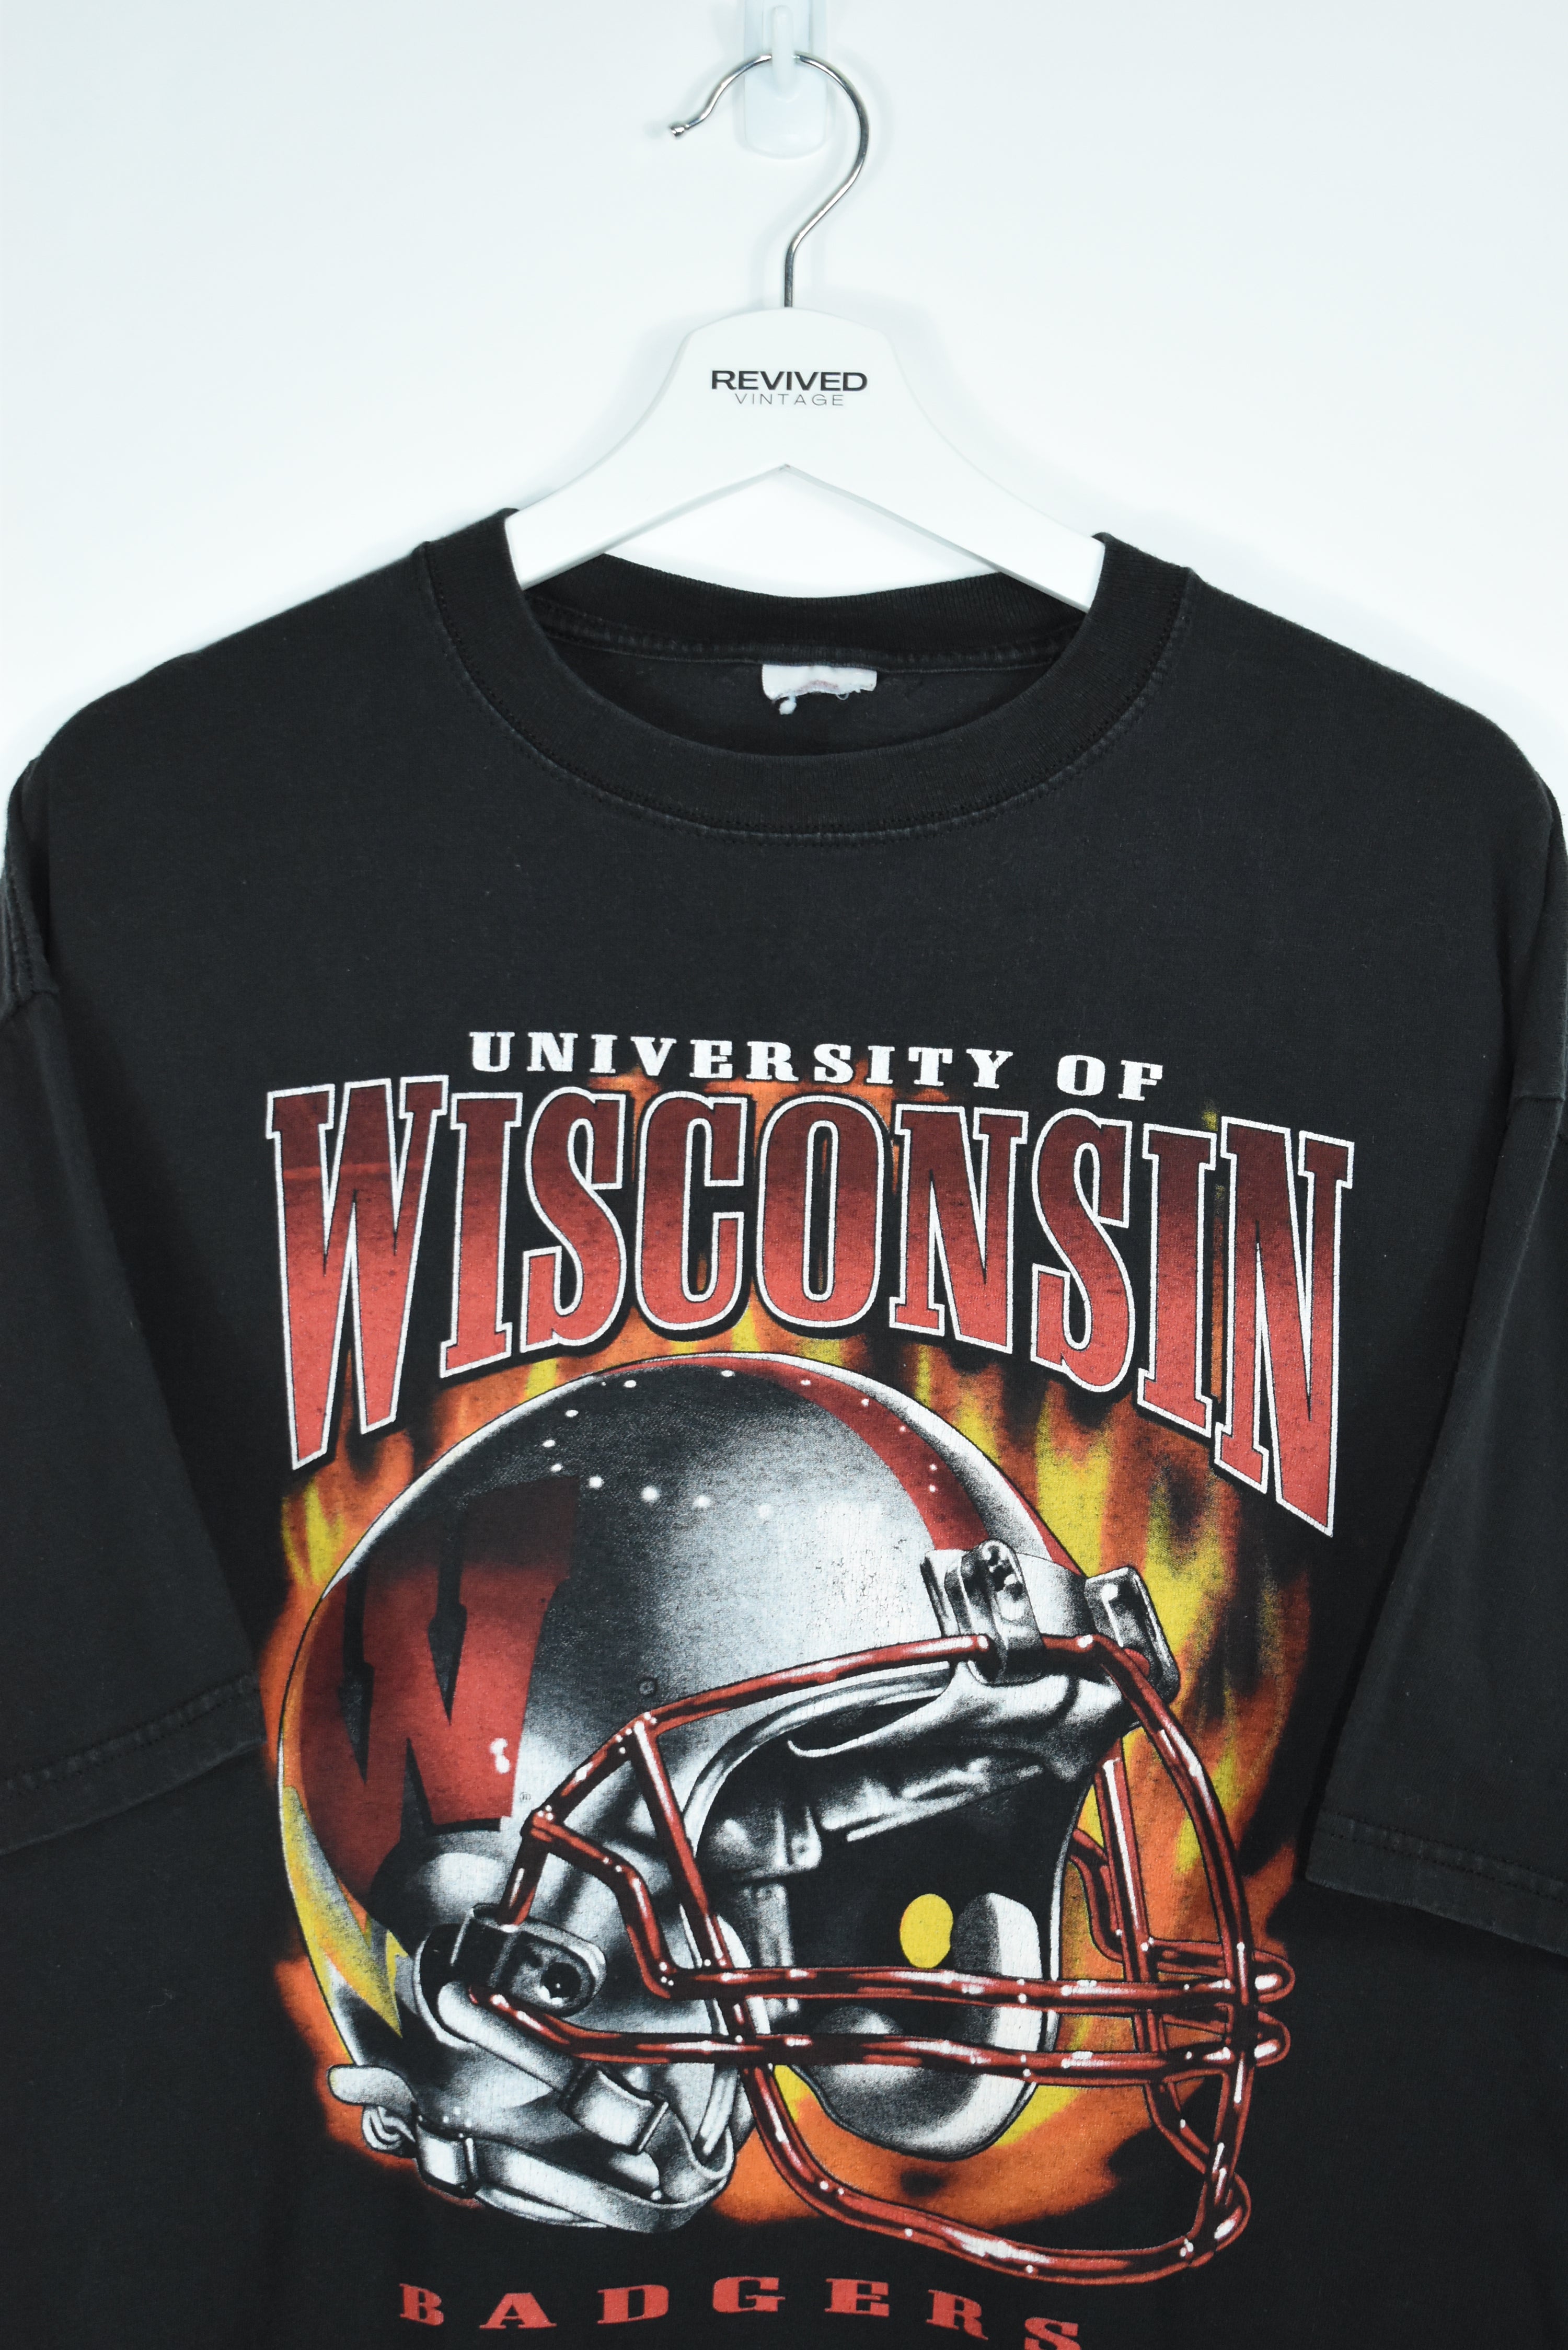 Vintage Wisconsin Badgers T Shirt XLARGE